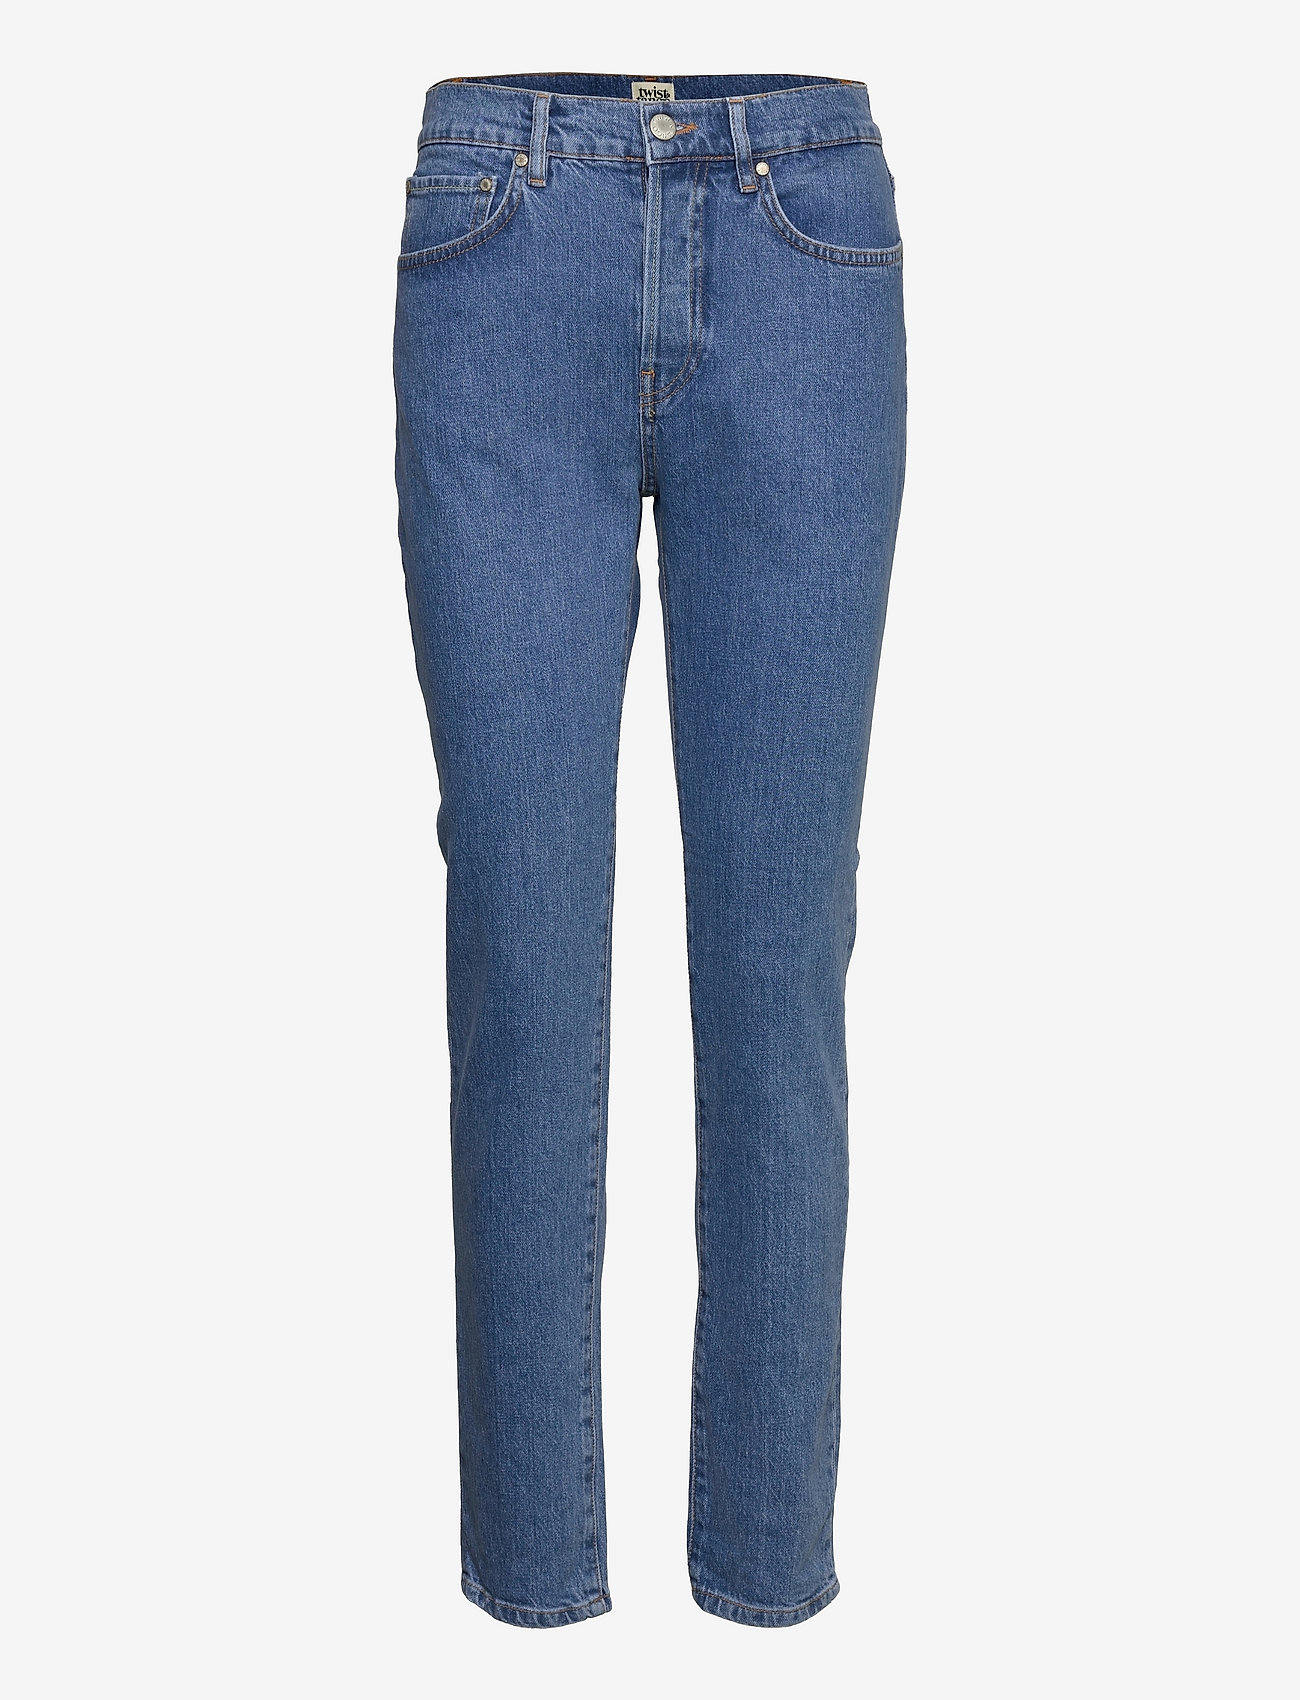 Twist & Tango - Fanny Jeans - slim jeans - mid blue - 0